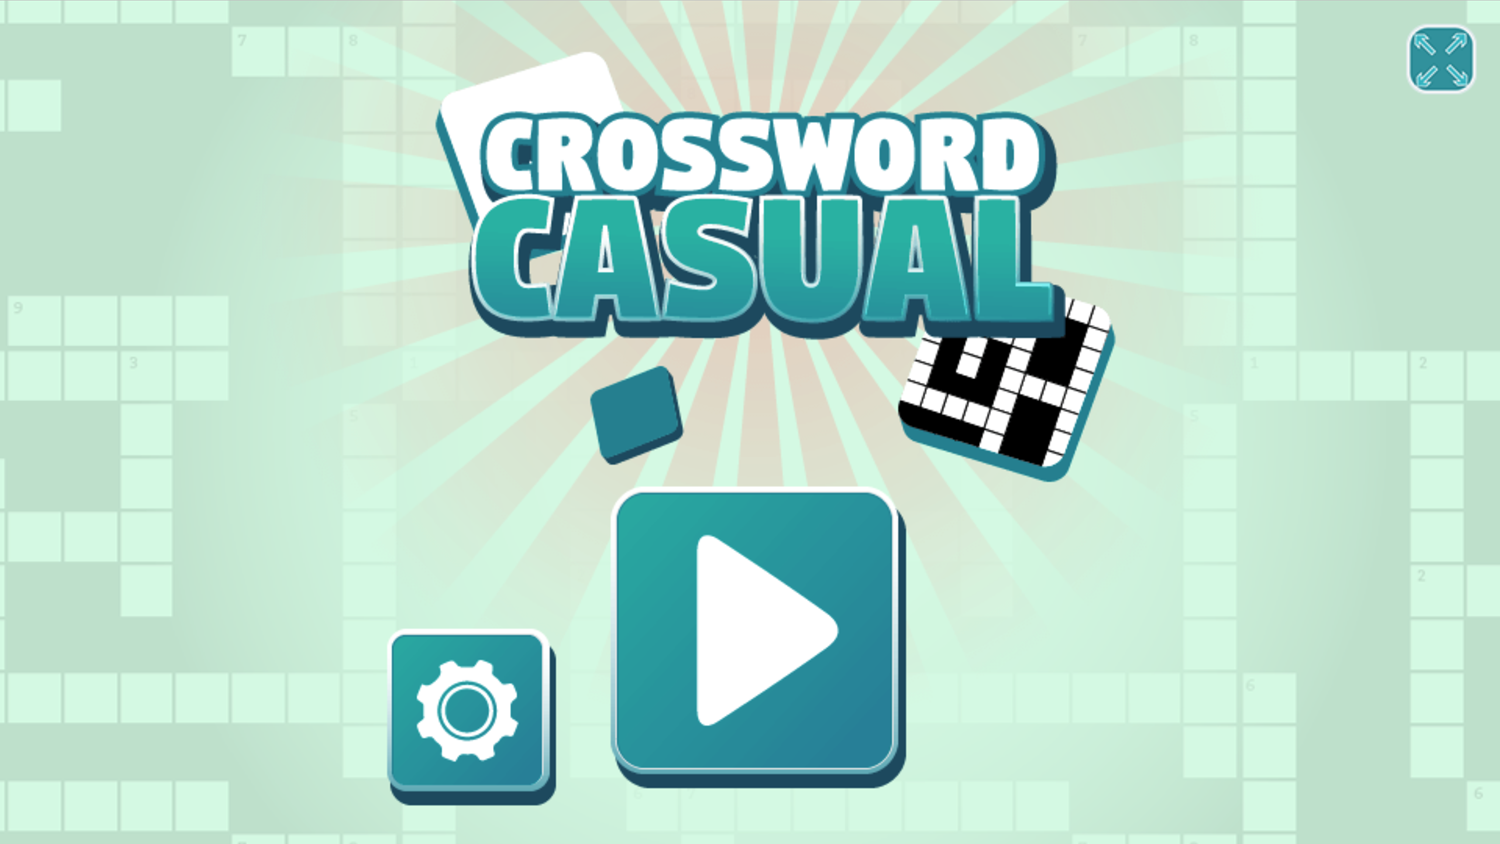 Crossword Casual Game Welcome Screen Screenshot.